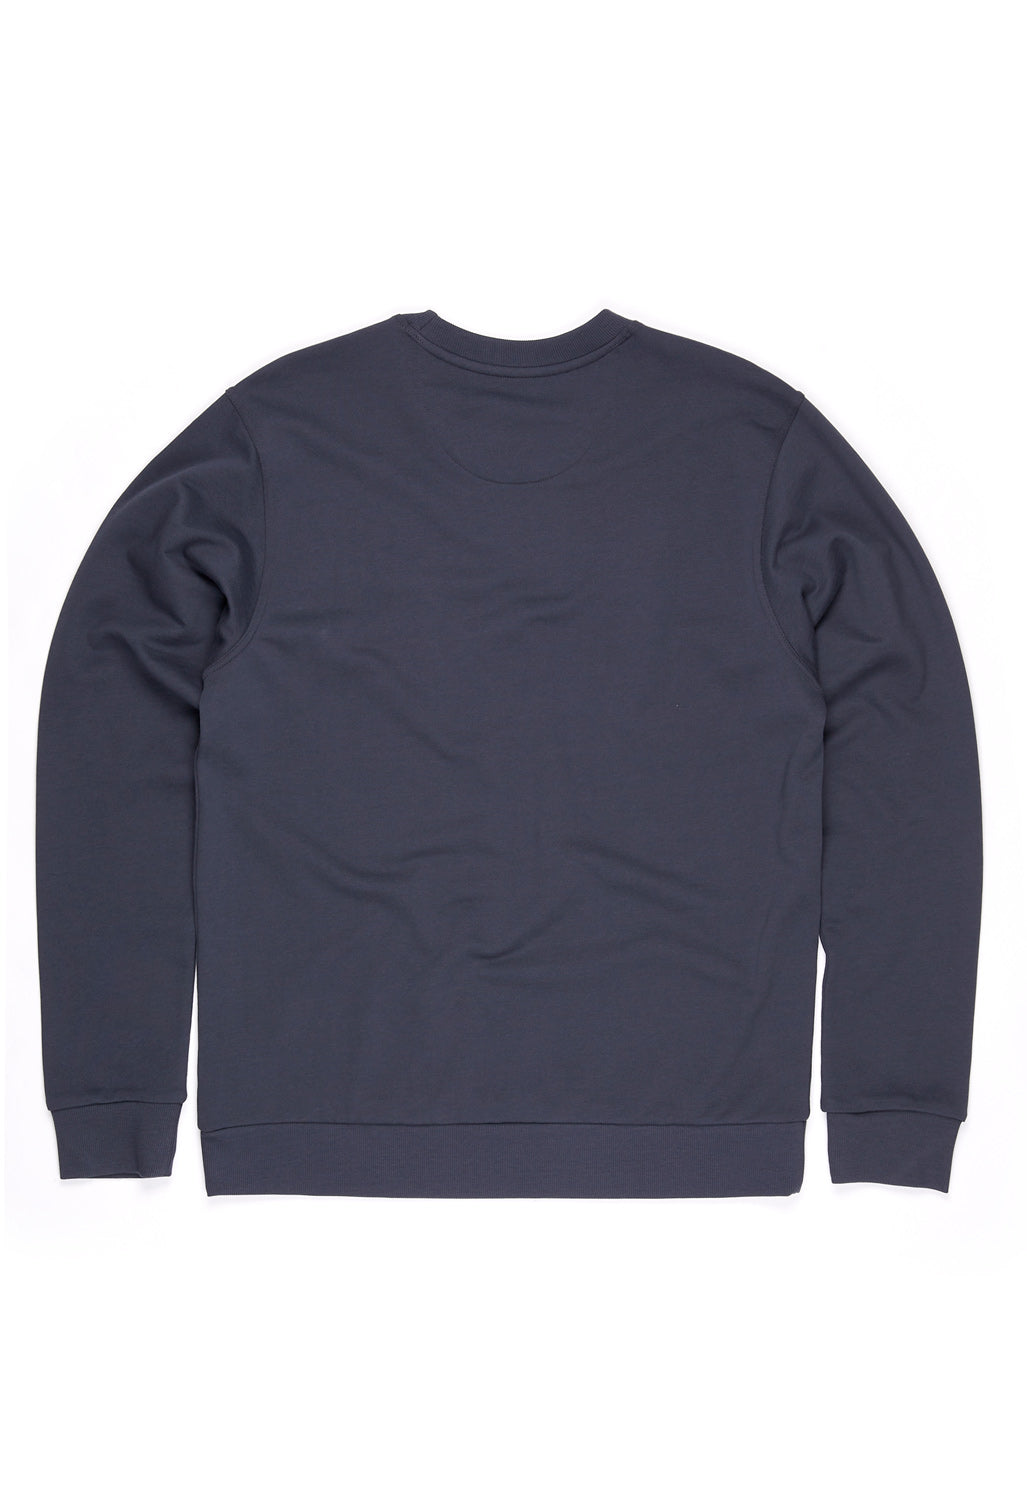 Patagonia Regen Cotton Men's Crewneck Sweatshirt - Ink/Smolder